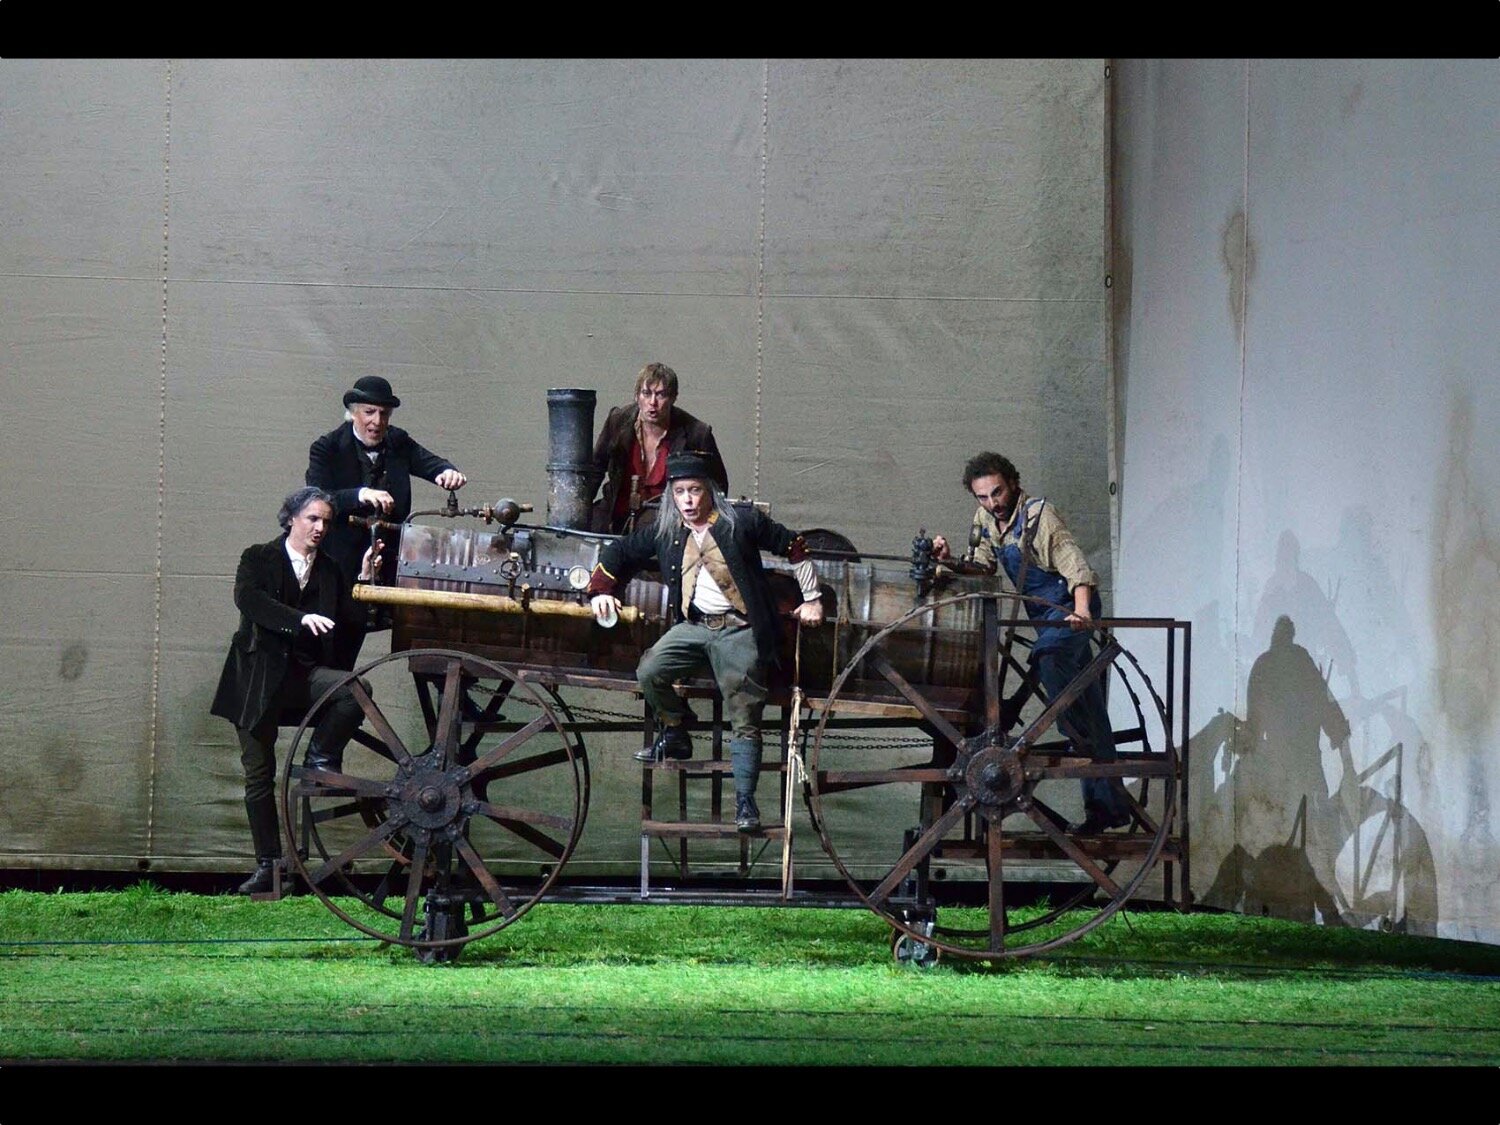  Falstaff
Teatro Petruzzelli
Bari, 2013
(photo courtesy of Teatro Petruzzelli) 